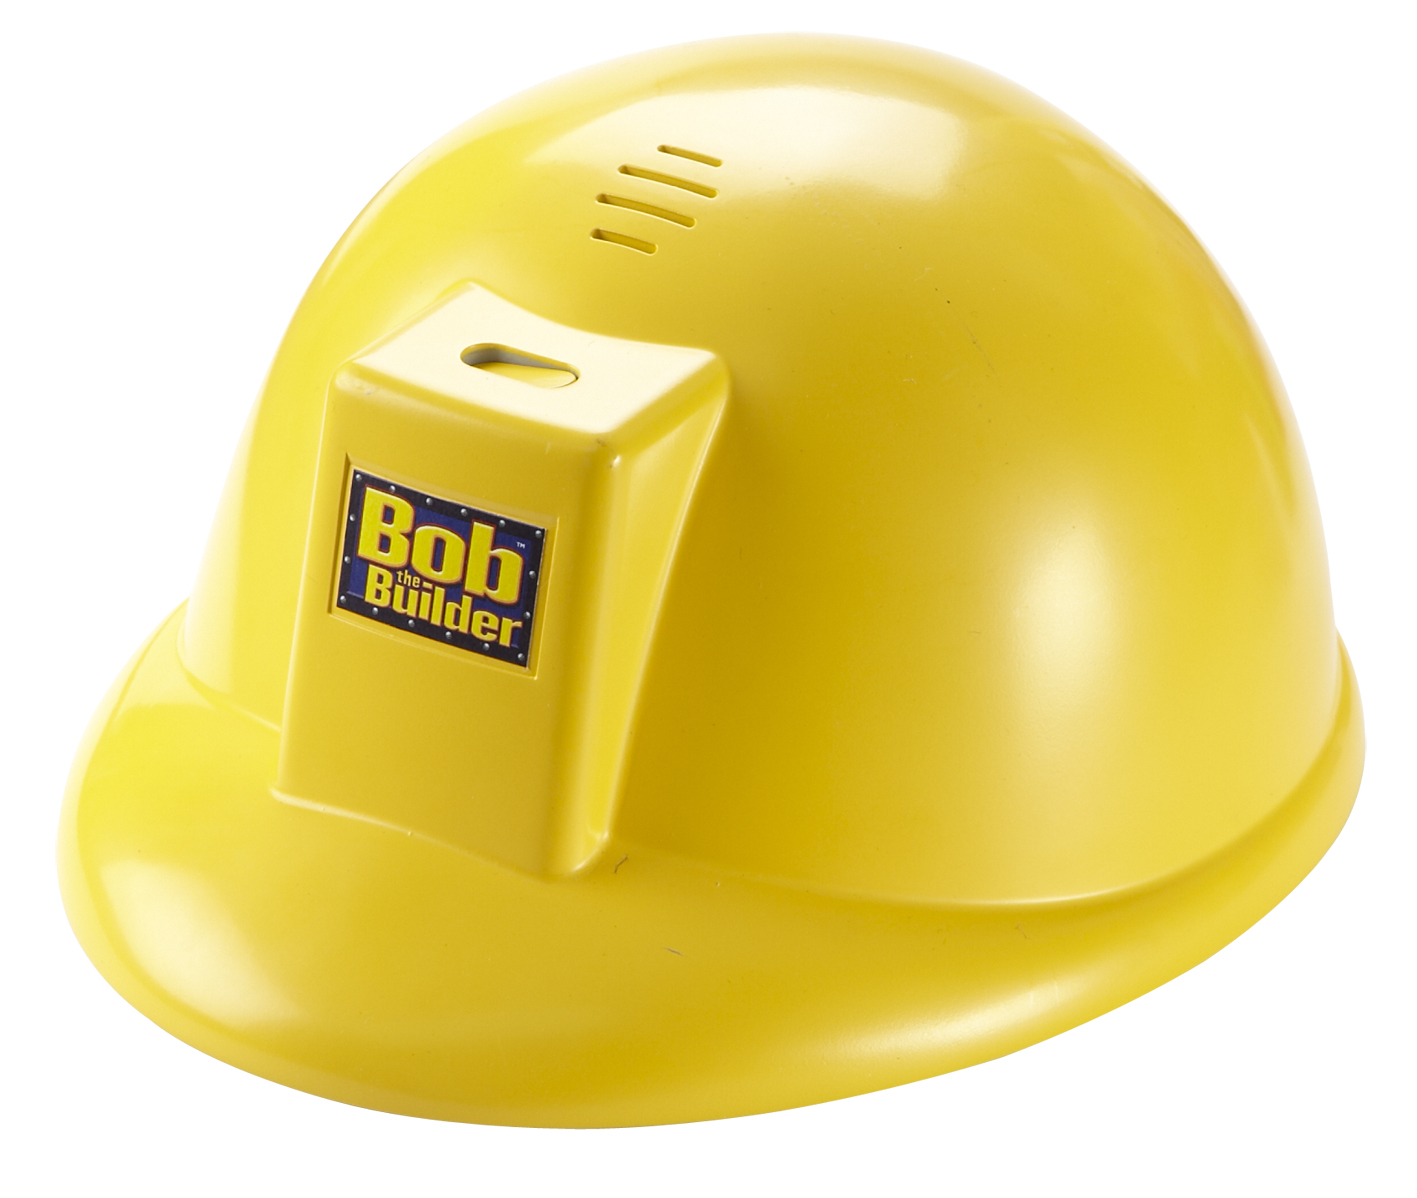 Bob the Builder - Helmet With Sound